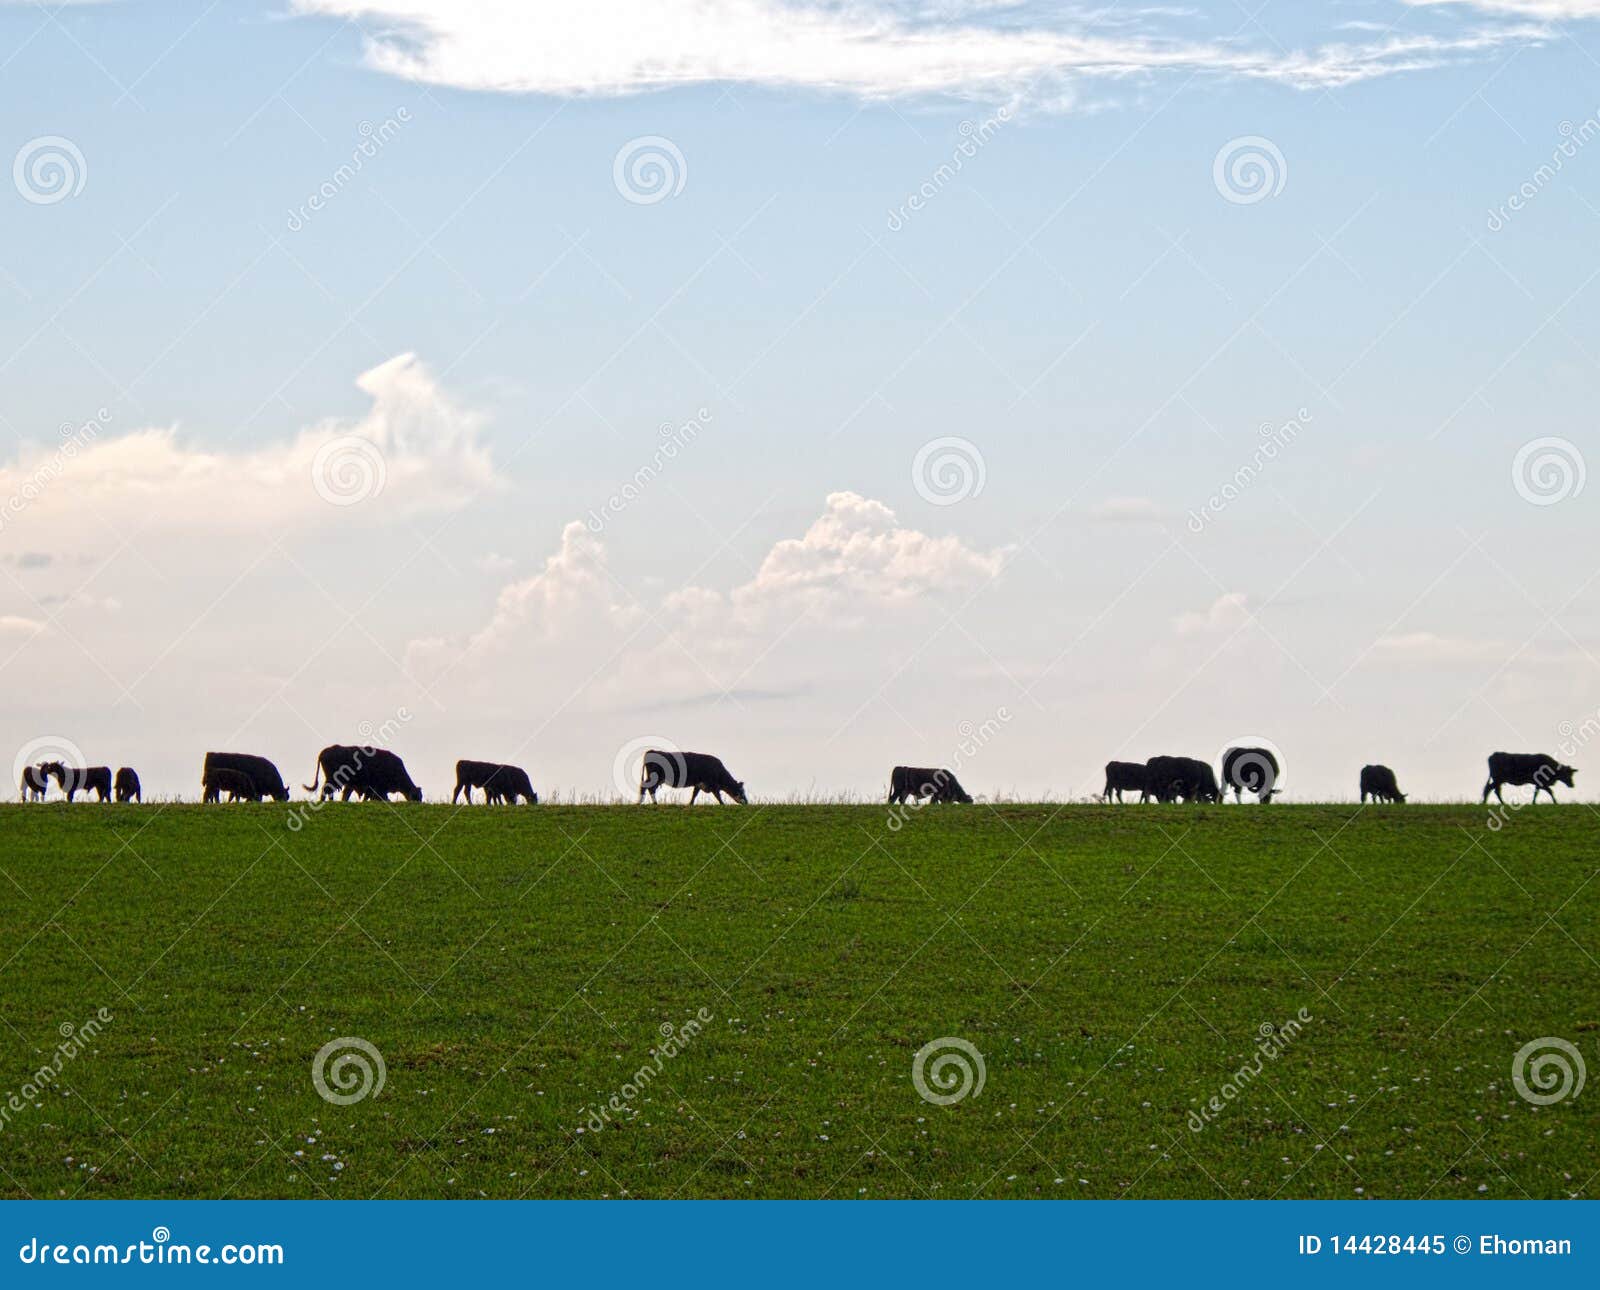 grazing cattle silhouette